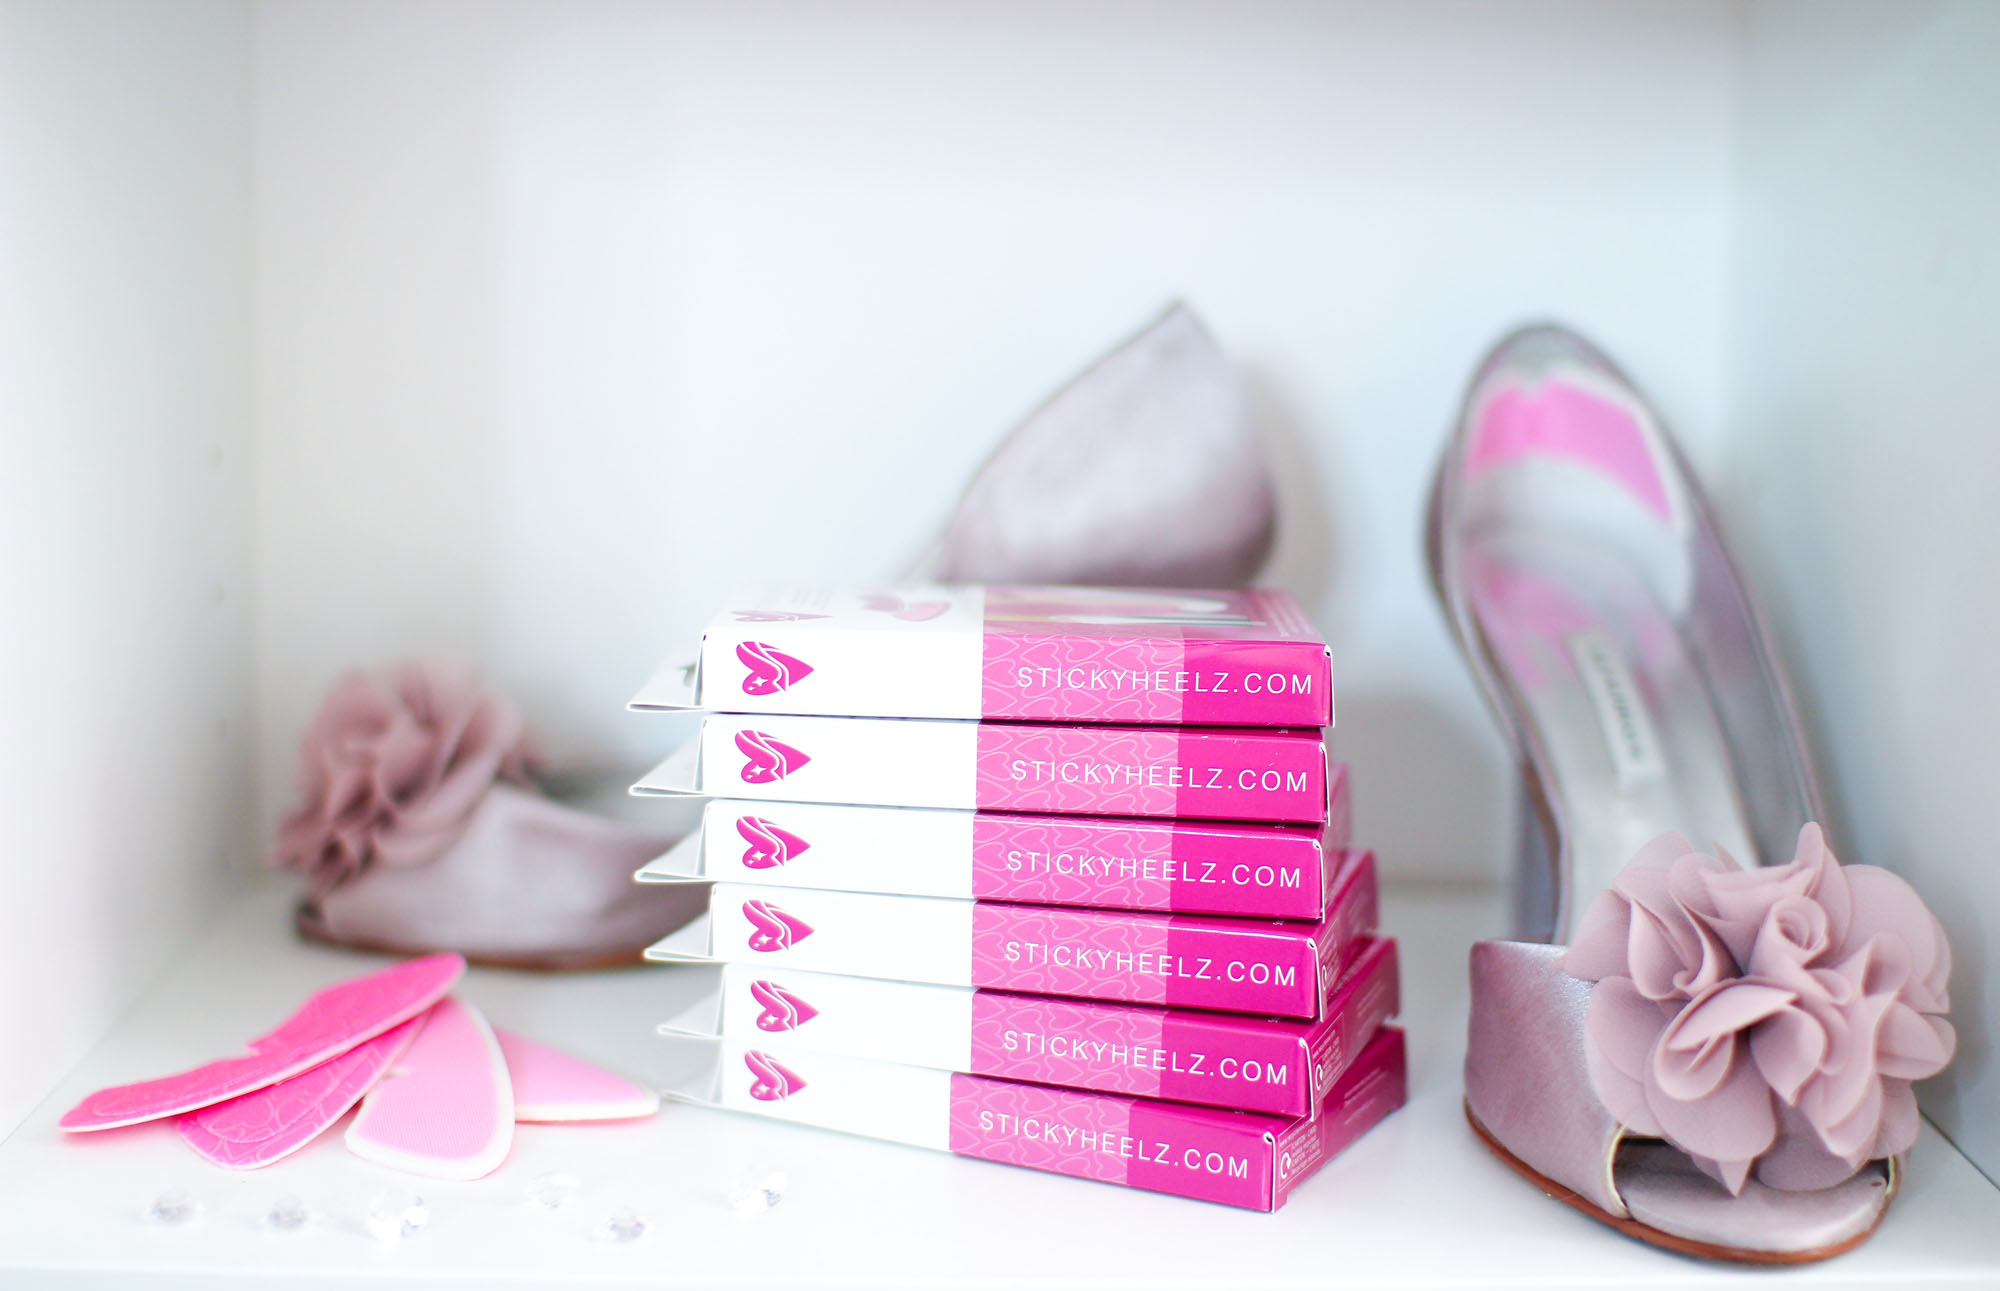 stickey heelz on shelf with high heel shoes